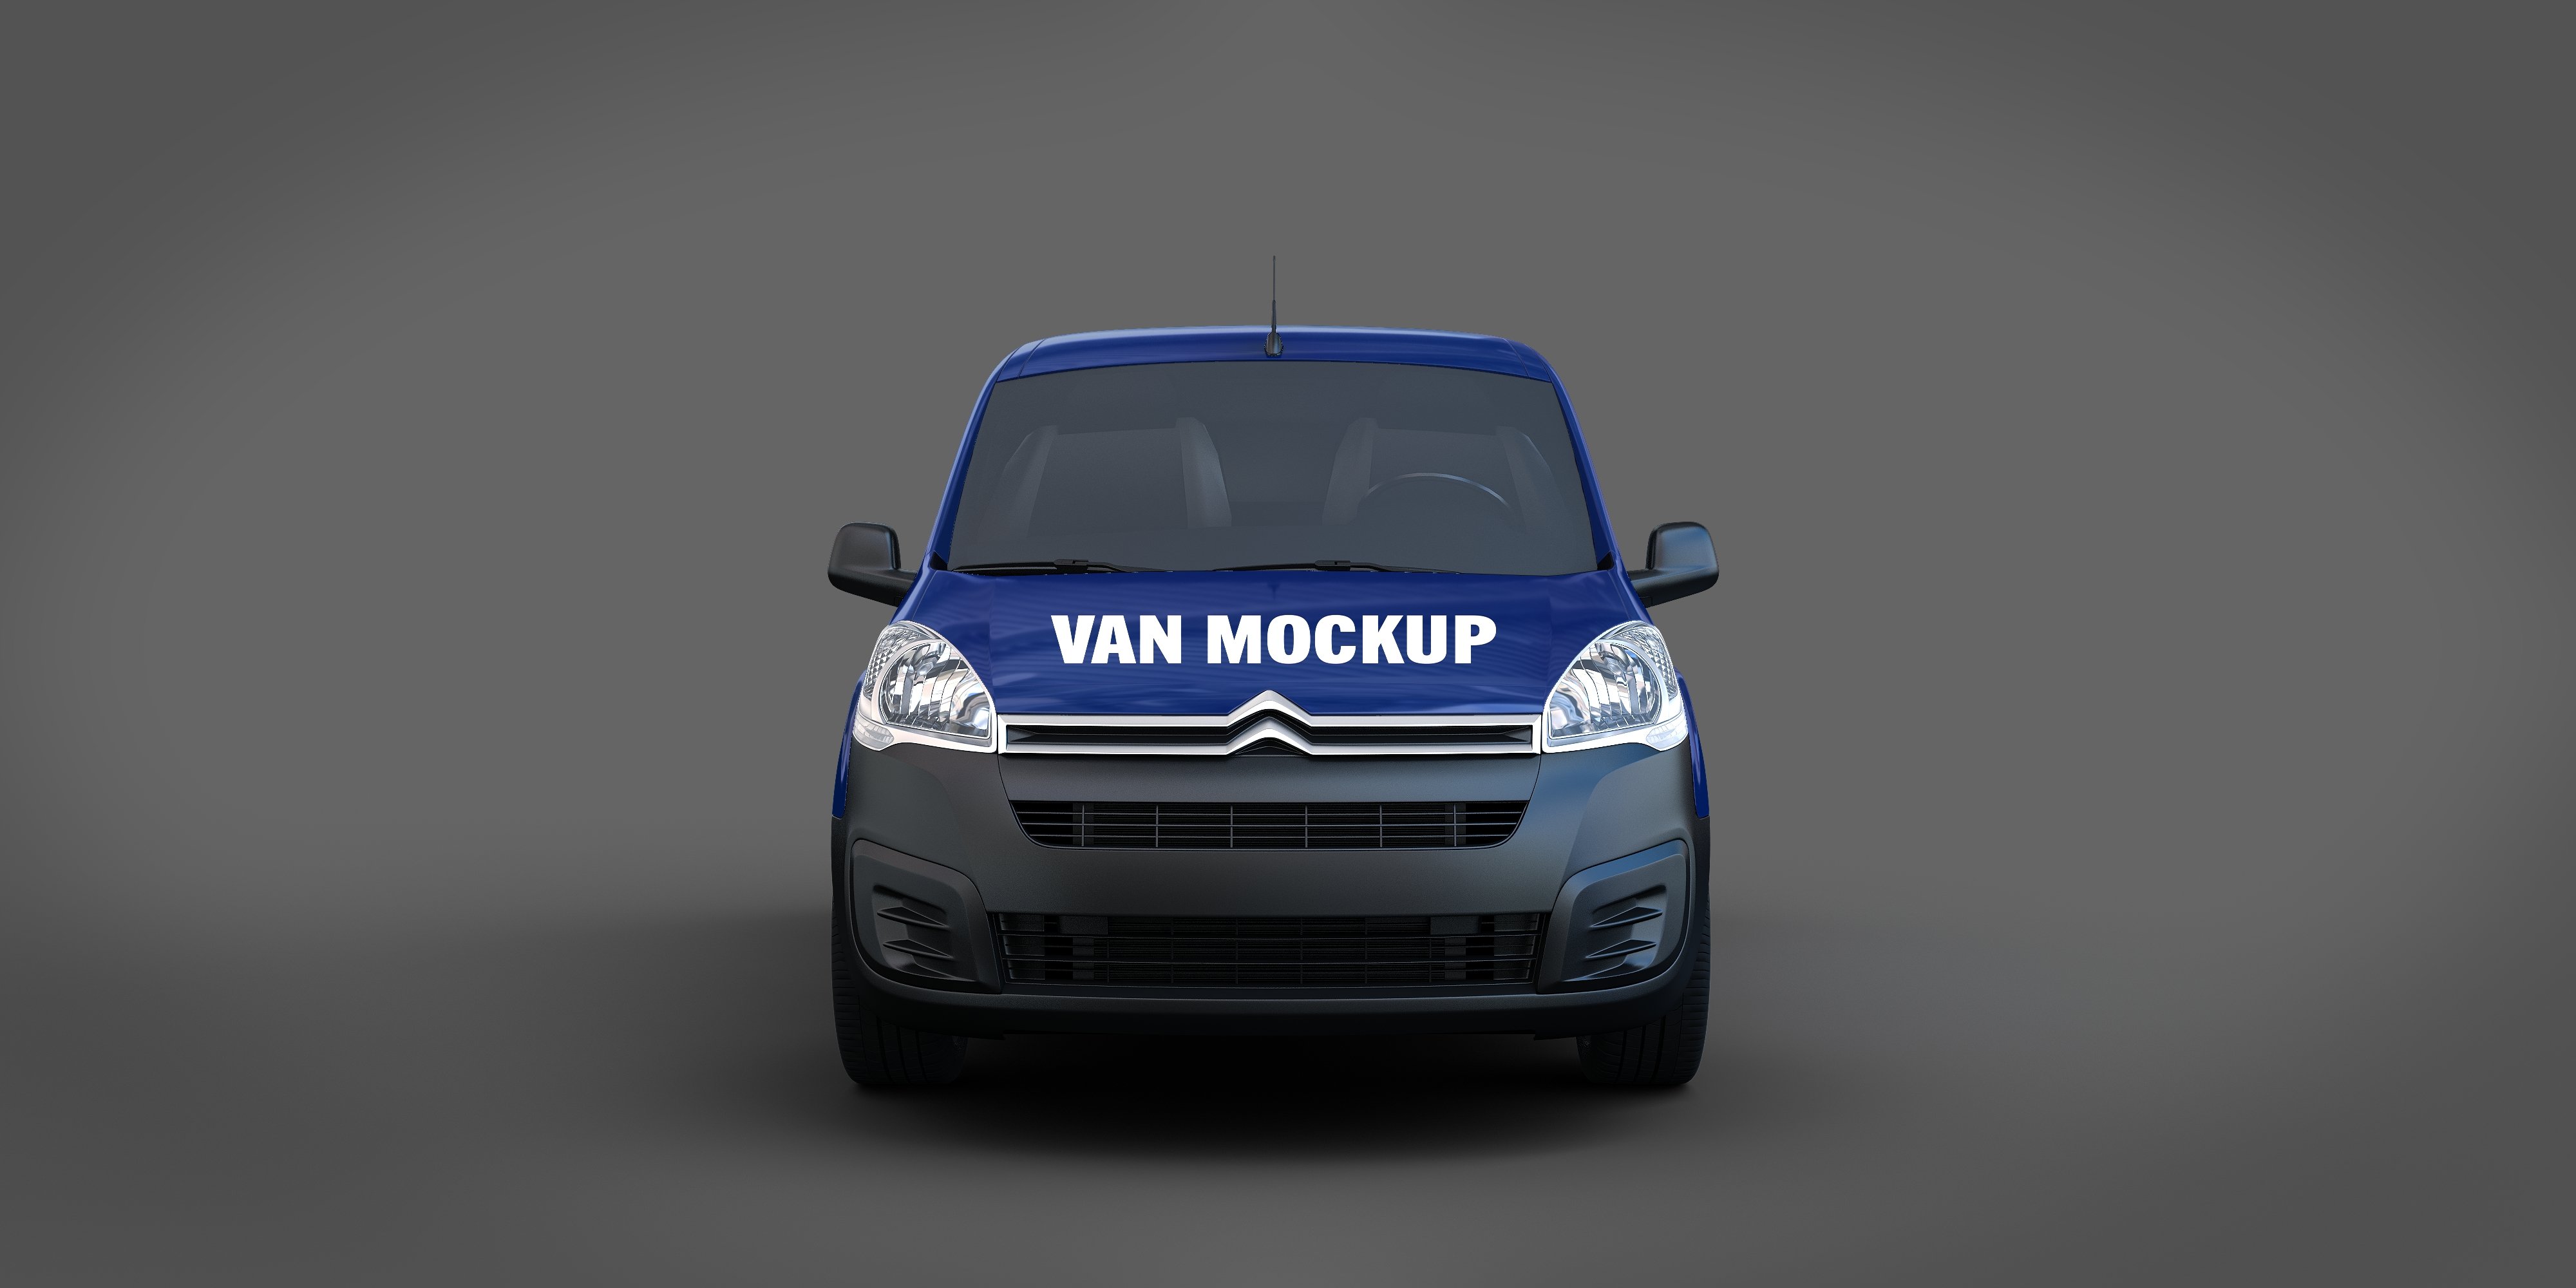 Van Mockup preview image.